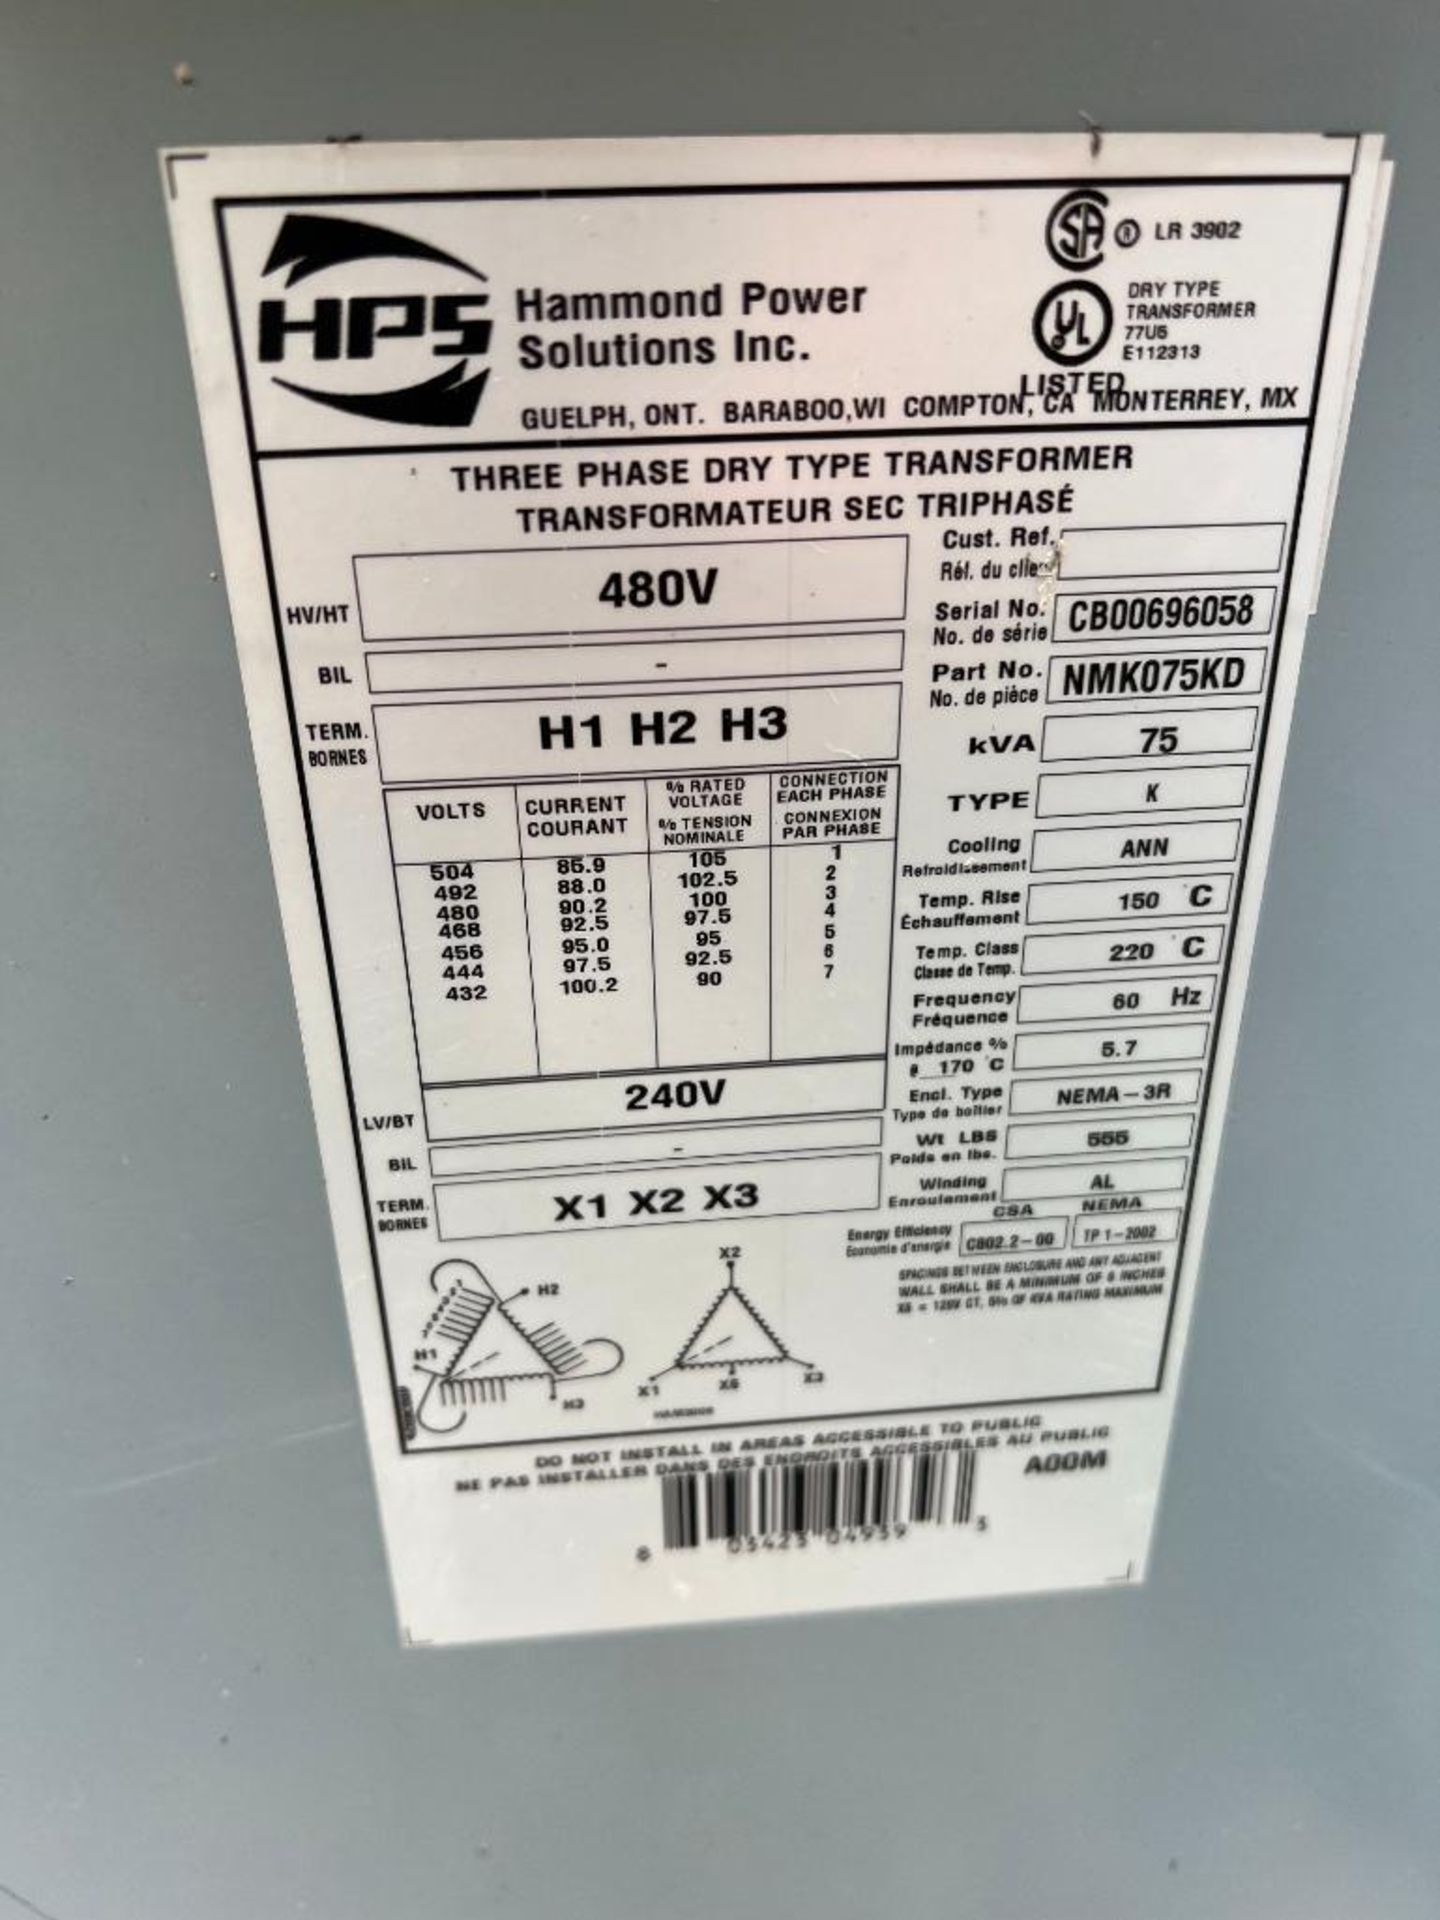 Hammond Power Solutions Transformer & Eaton Switchgear - Image 2 of 3